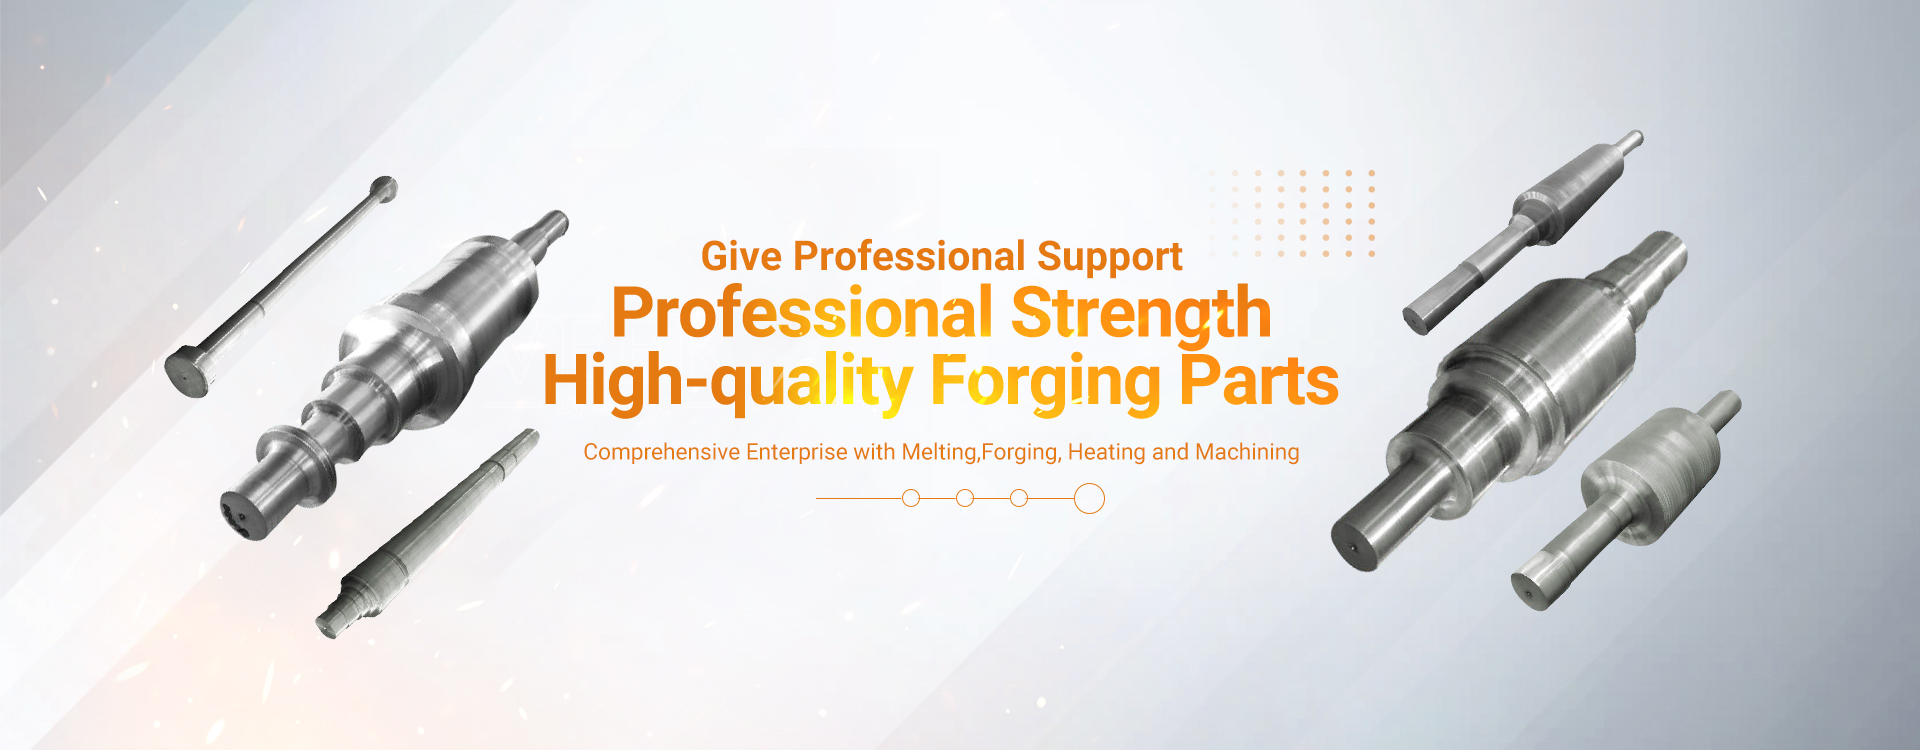 high quality forging parts